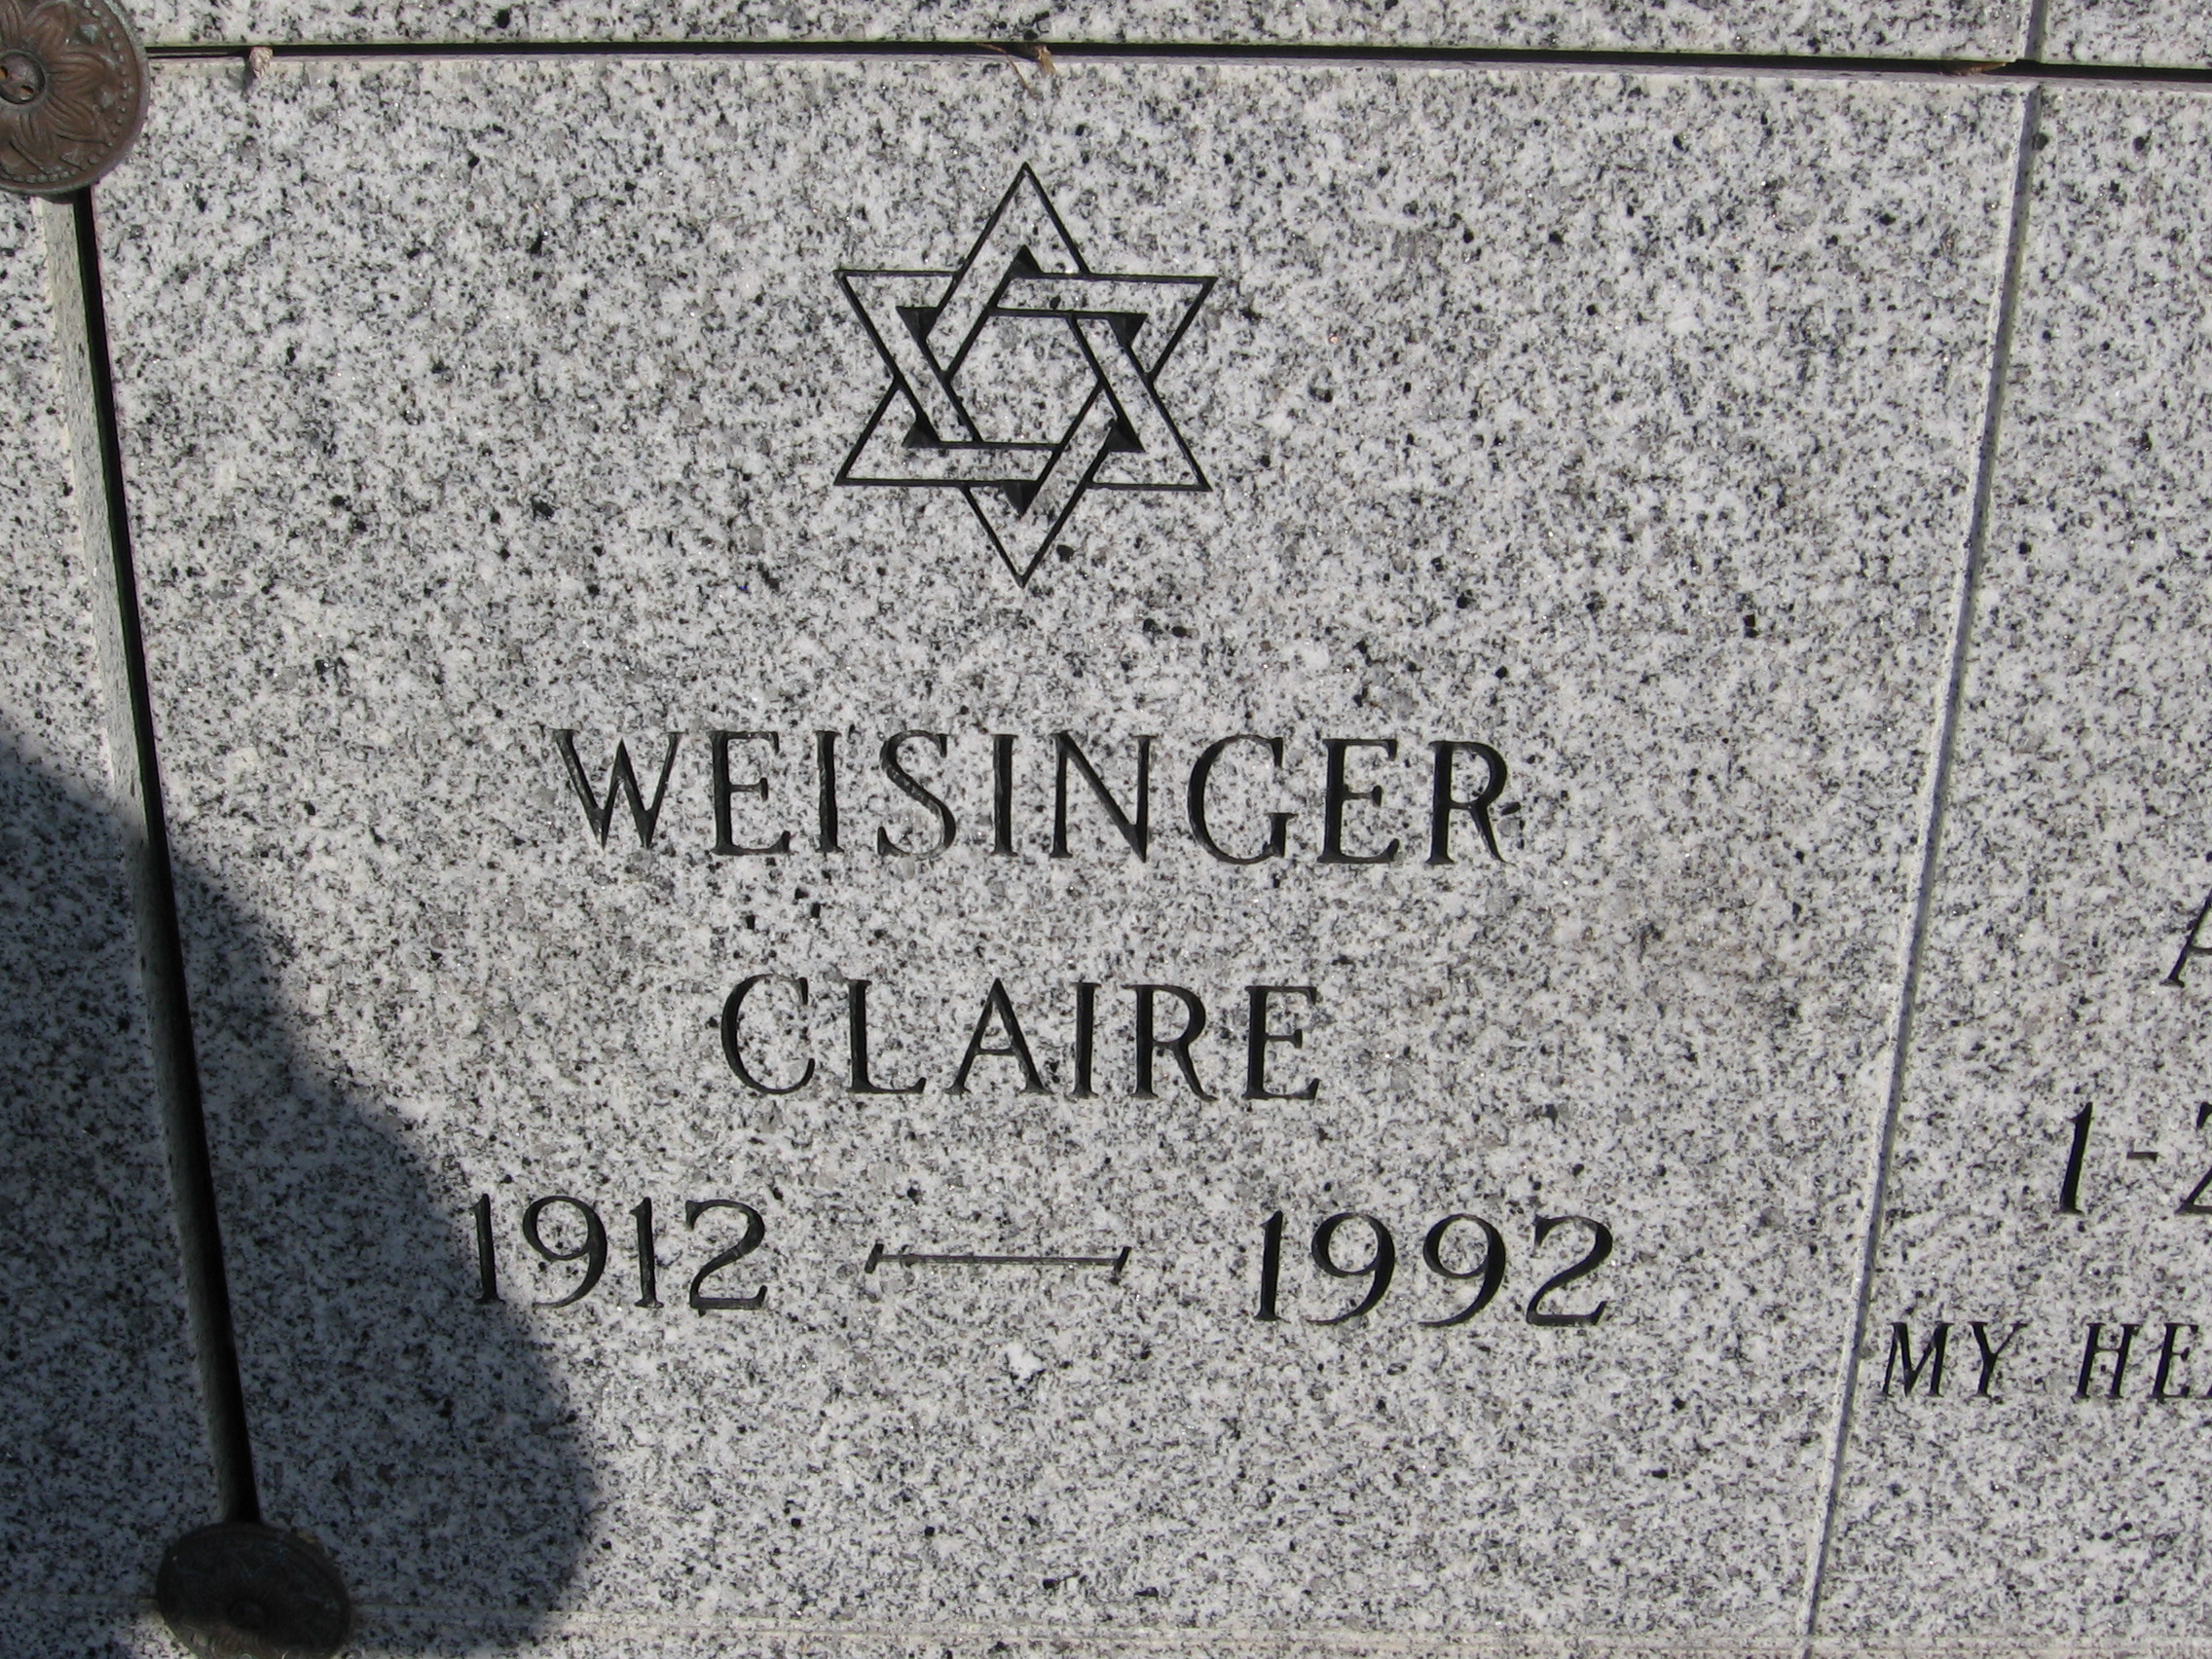 Claire Weisinger